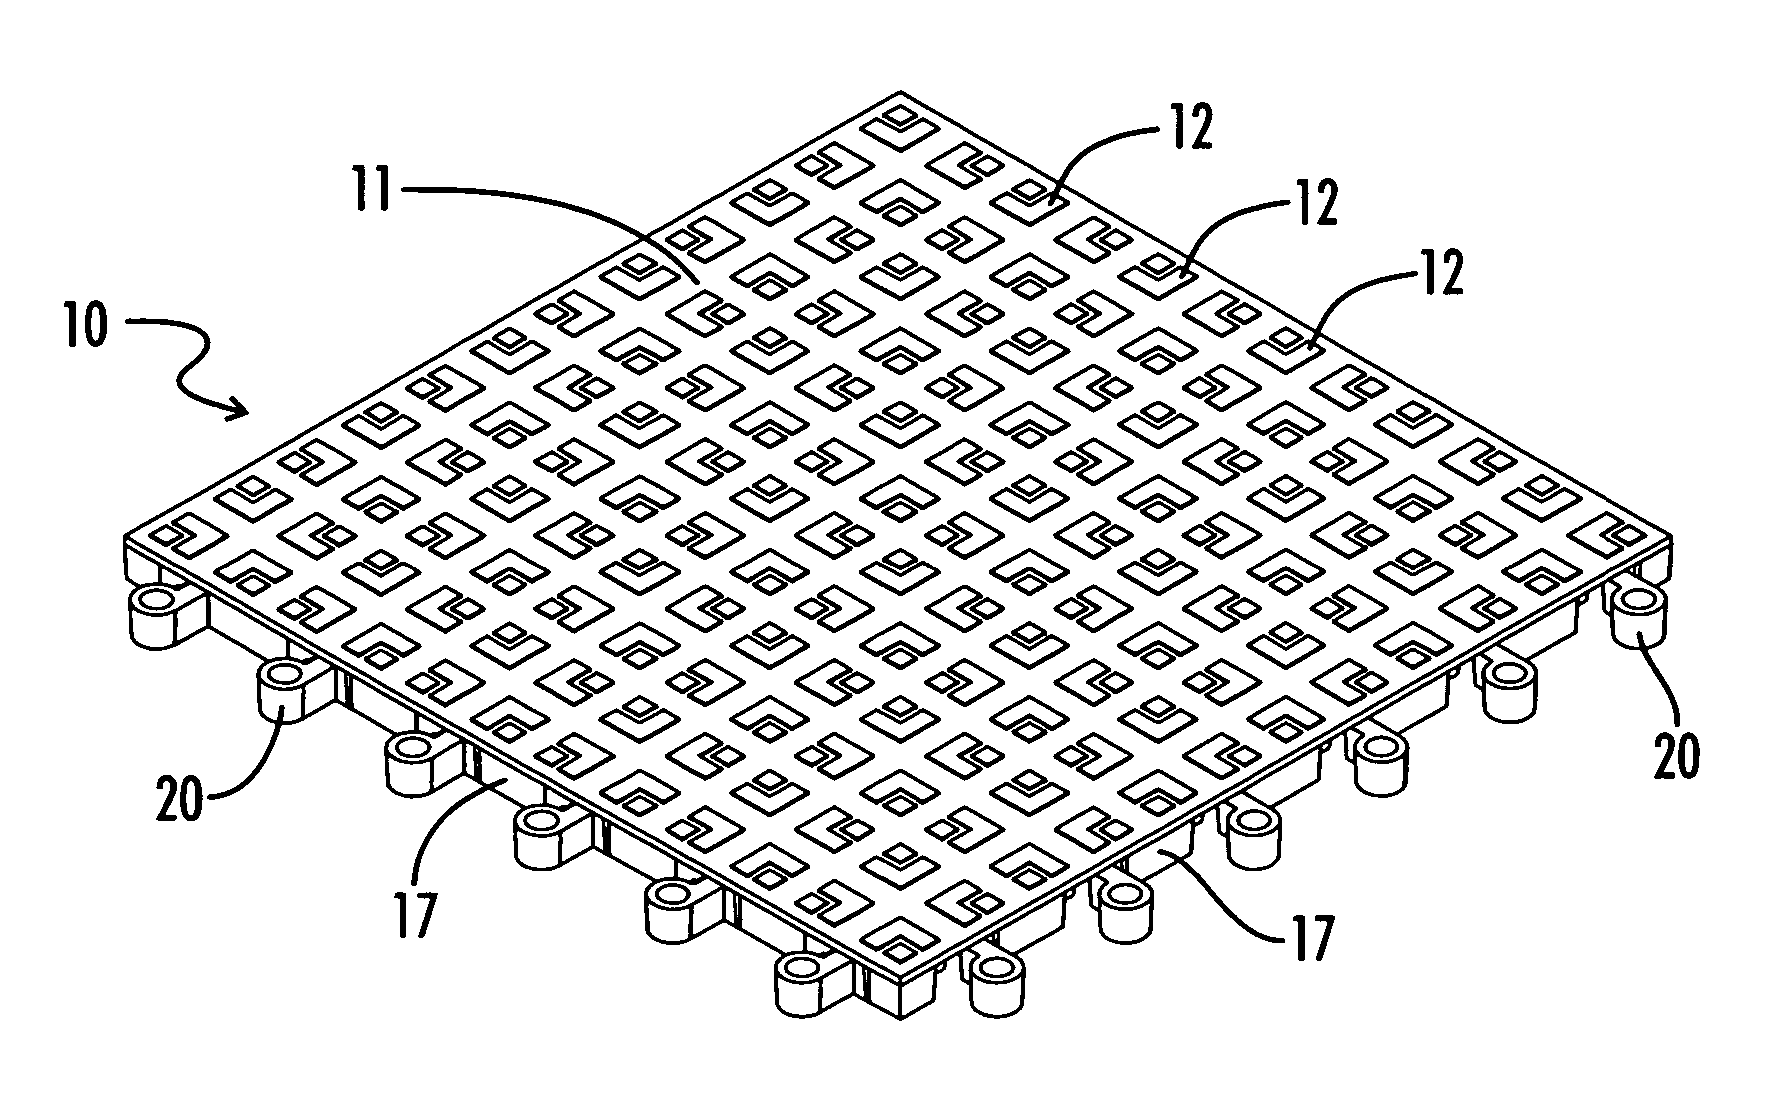 Interlocking modular floor tile